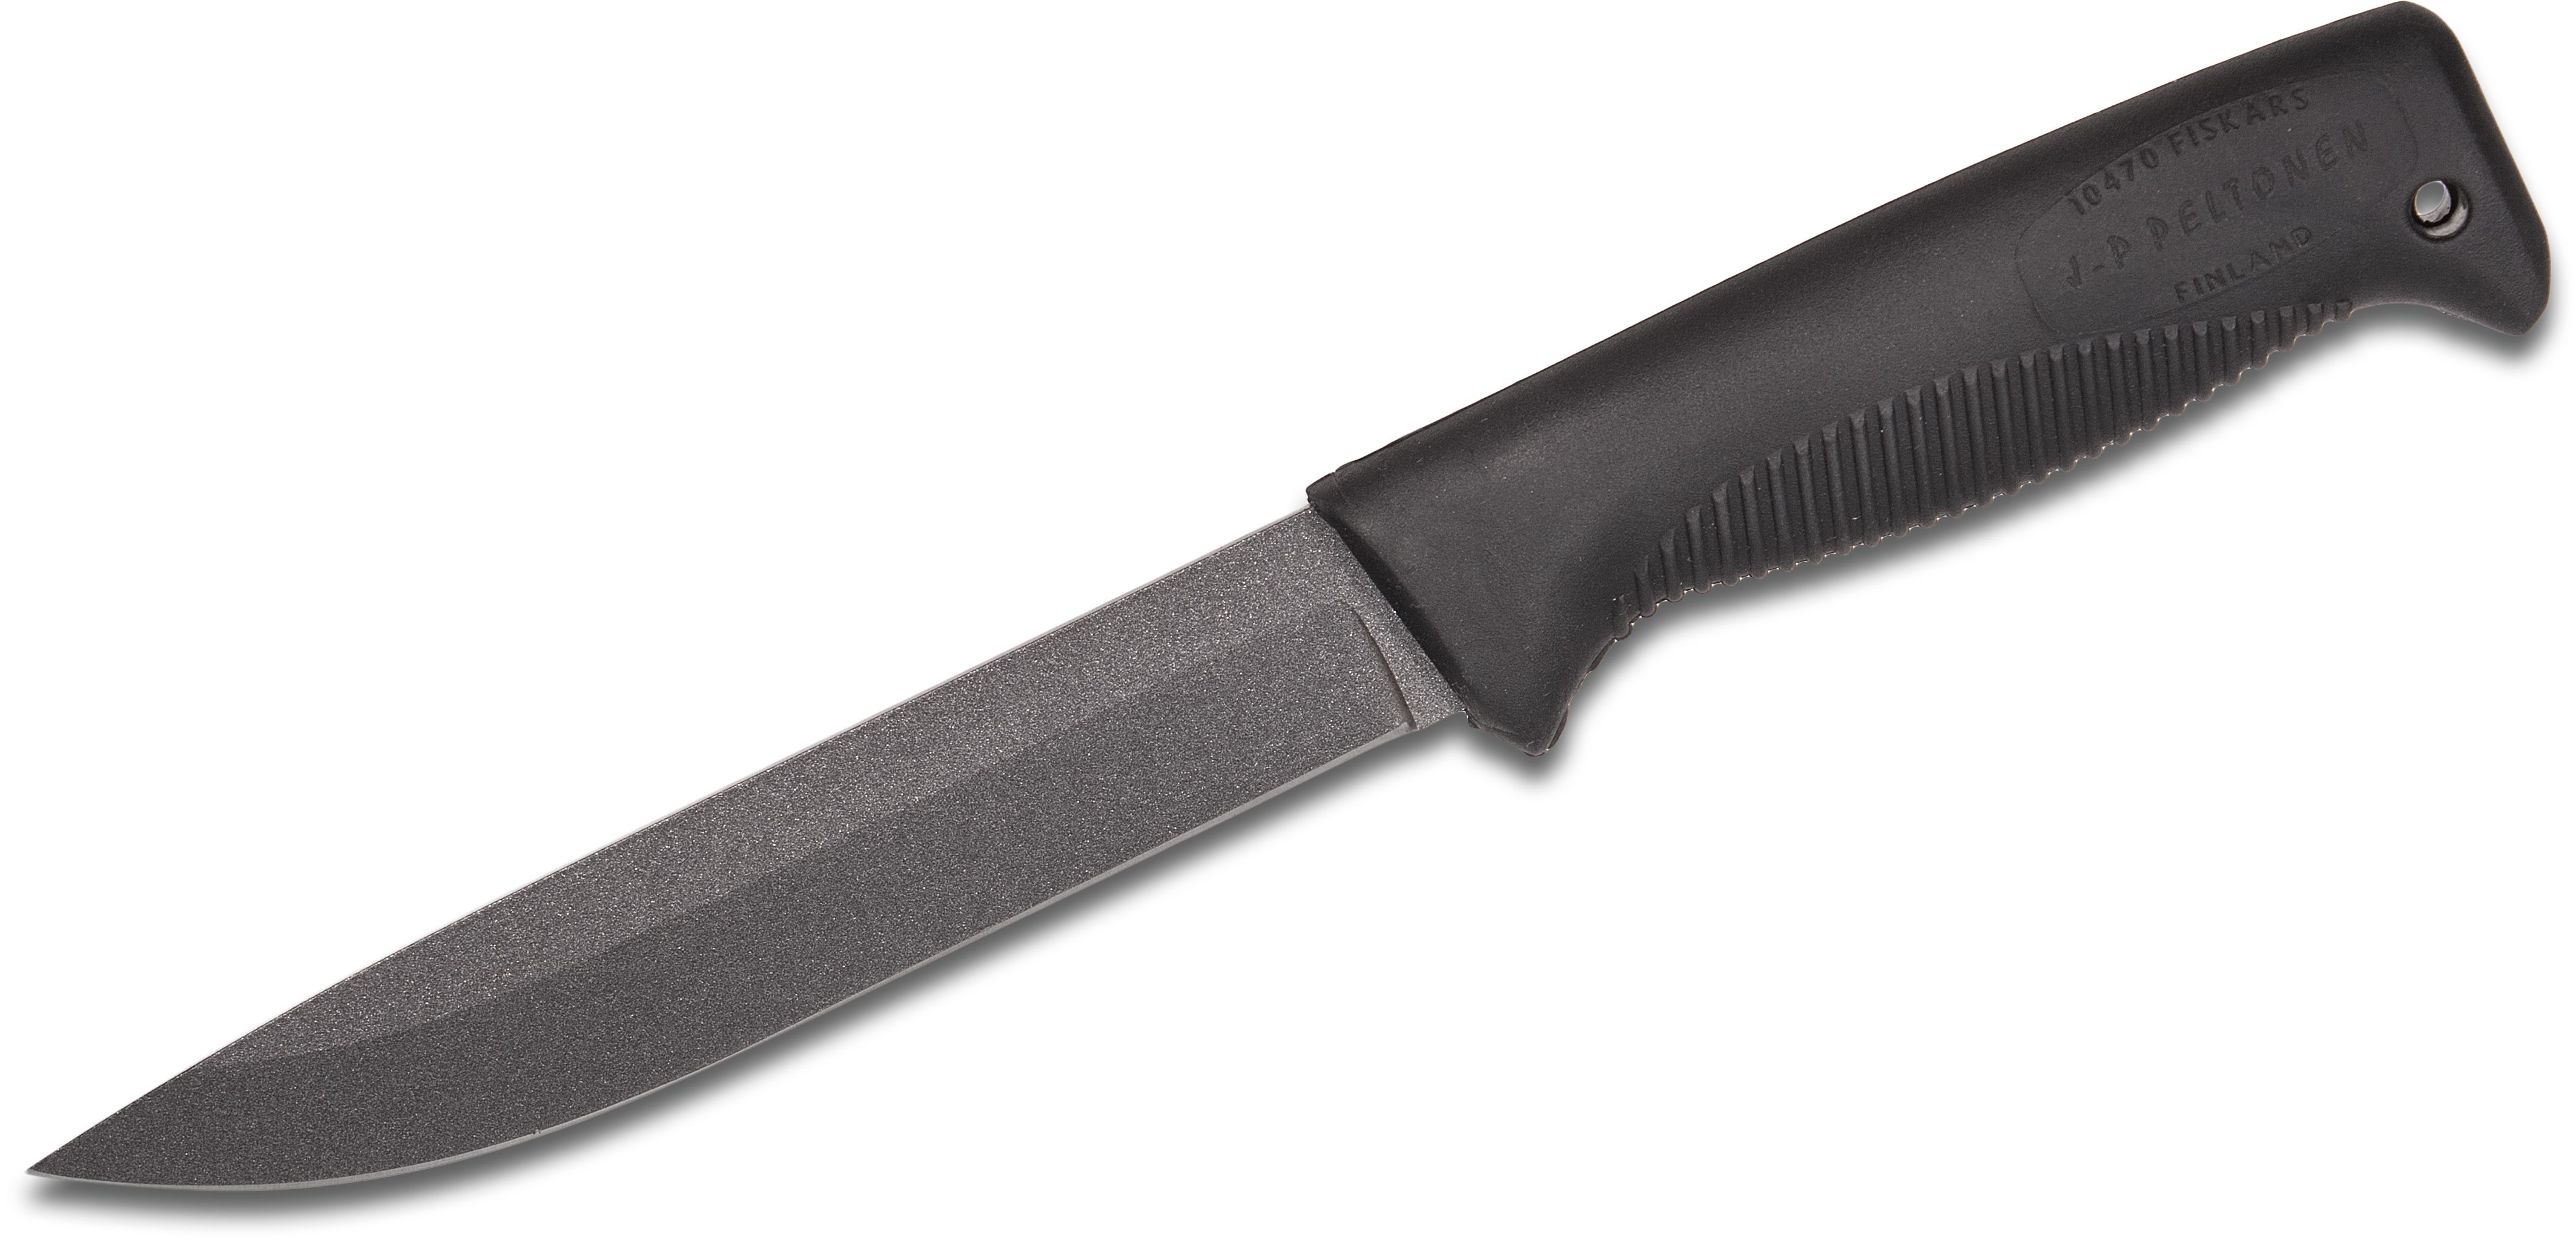 Kellam Knives Finnish Ranger Puukko M95 Fixed Blade Knife 5.94 Teflon  Coated Blade, Black Rubber Handle, Leather Sheath - KnifeCenter - JPM95